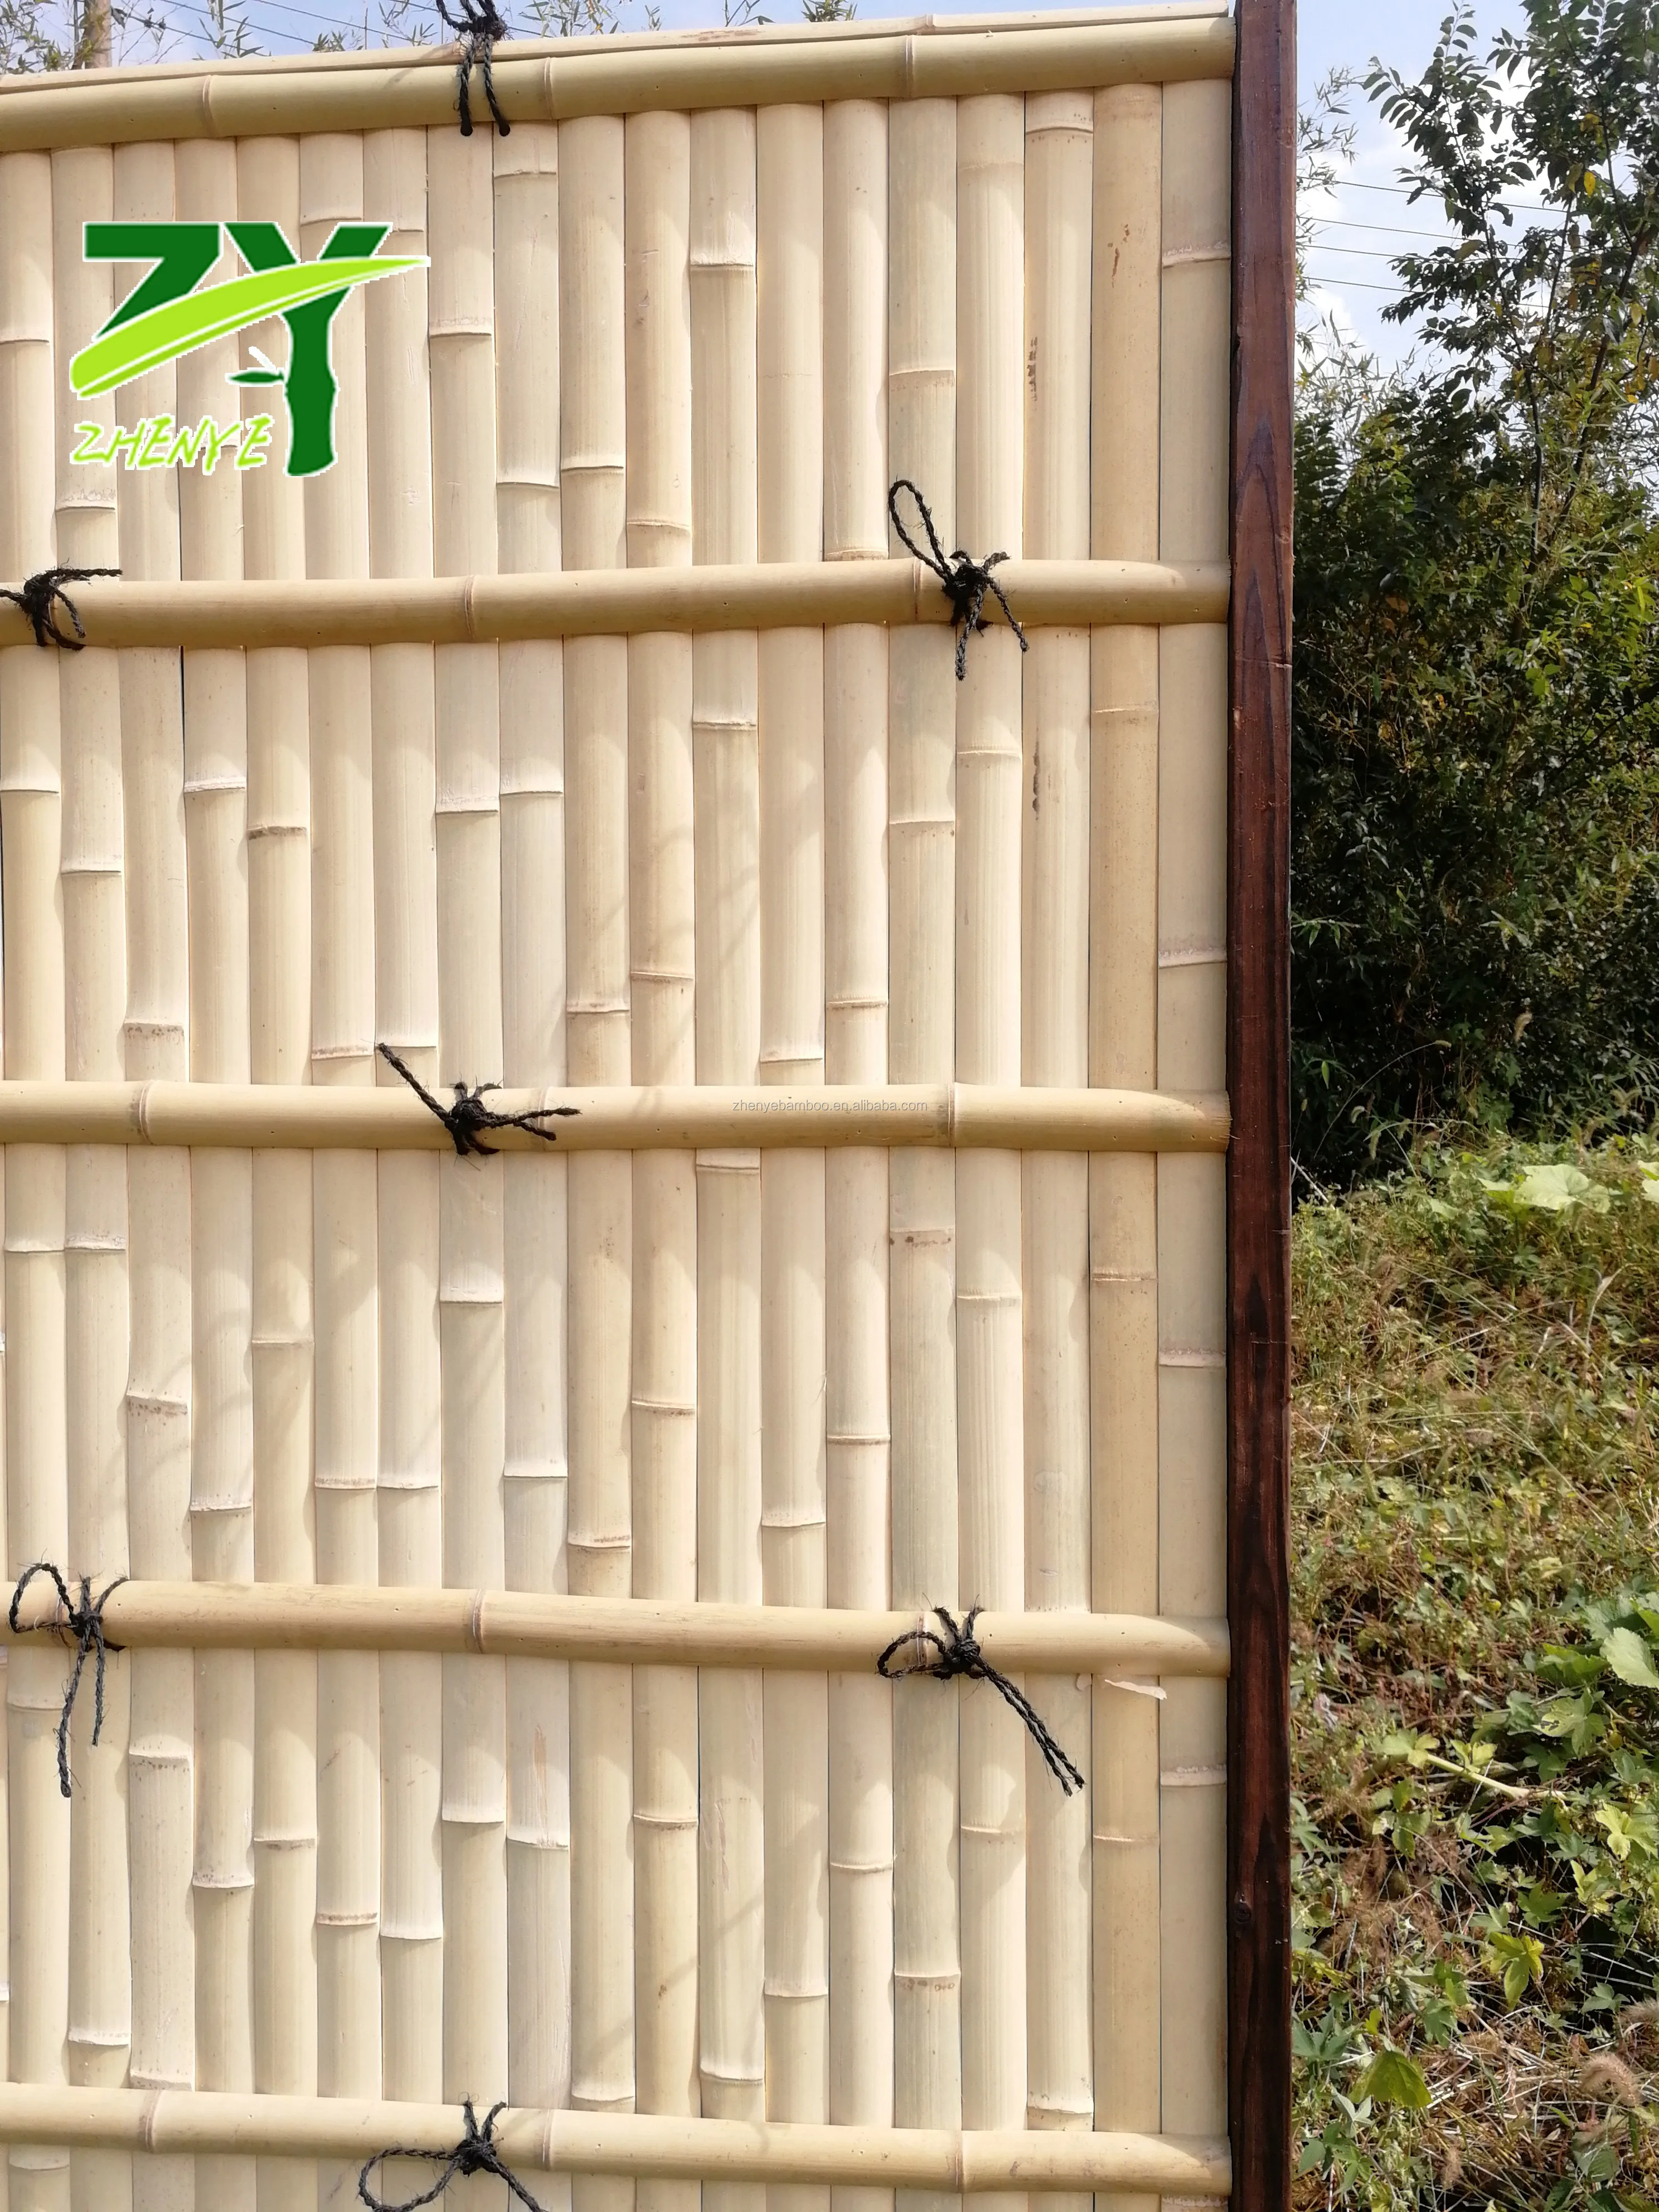 Zy-321 New Developed Bamboo Fence Panel For Garden,Backyard Bamboo